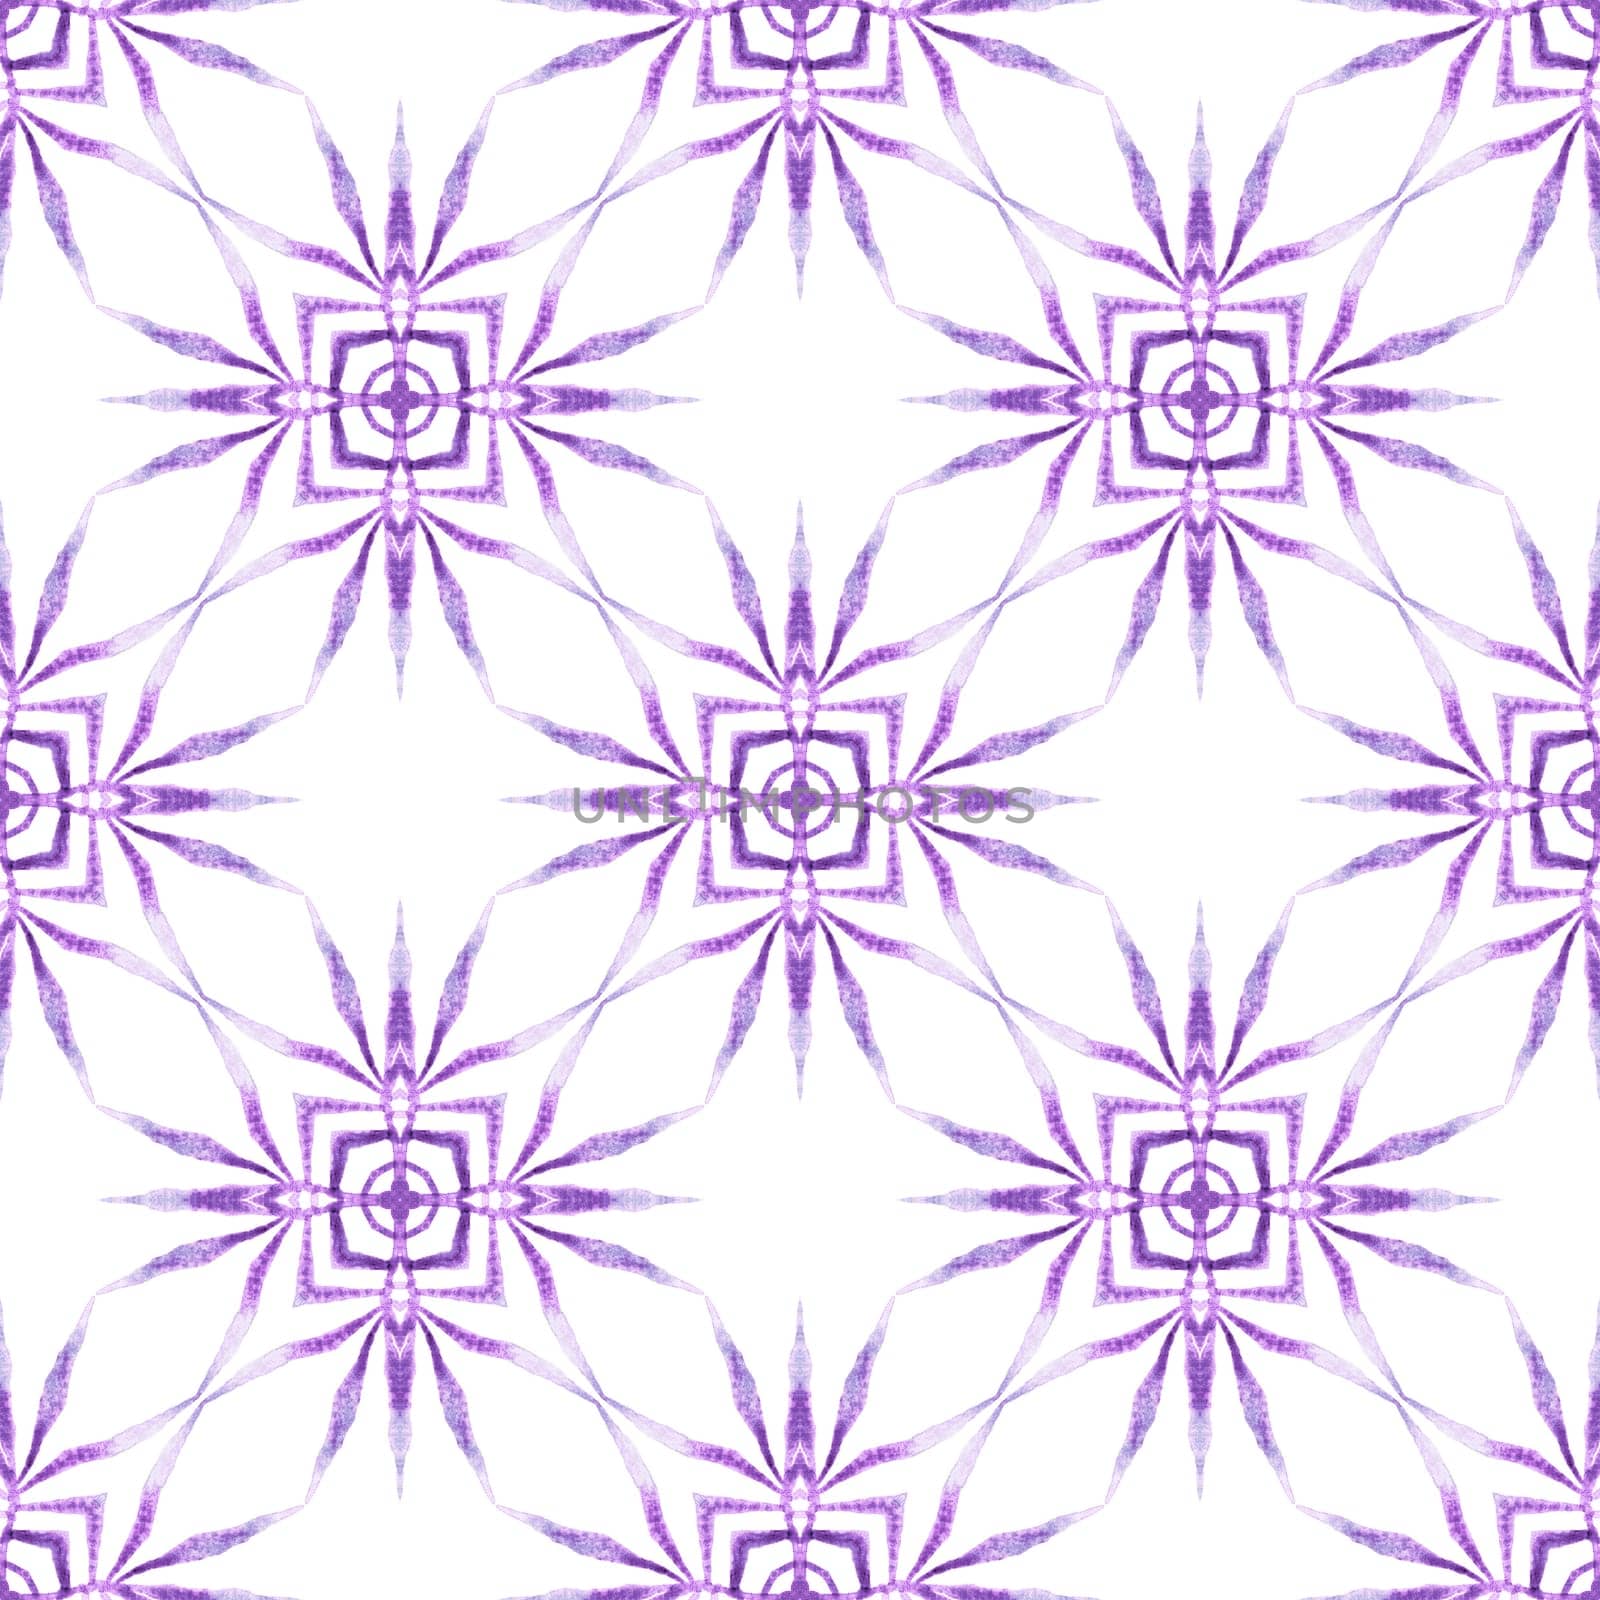 Striped hand drawn design. Purple attractive boho chic summer design. Repeating striped hand drawn border. Textile ready adorable print, swimwear fabric, wallpaper, wrapping.